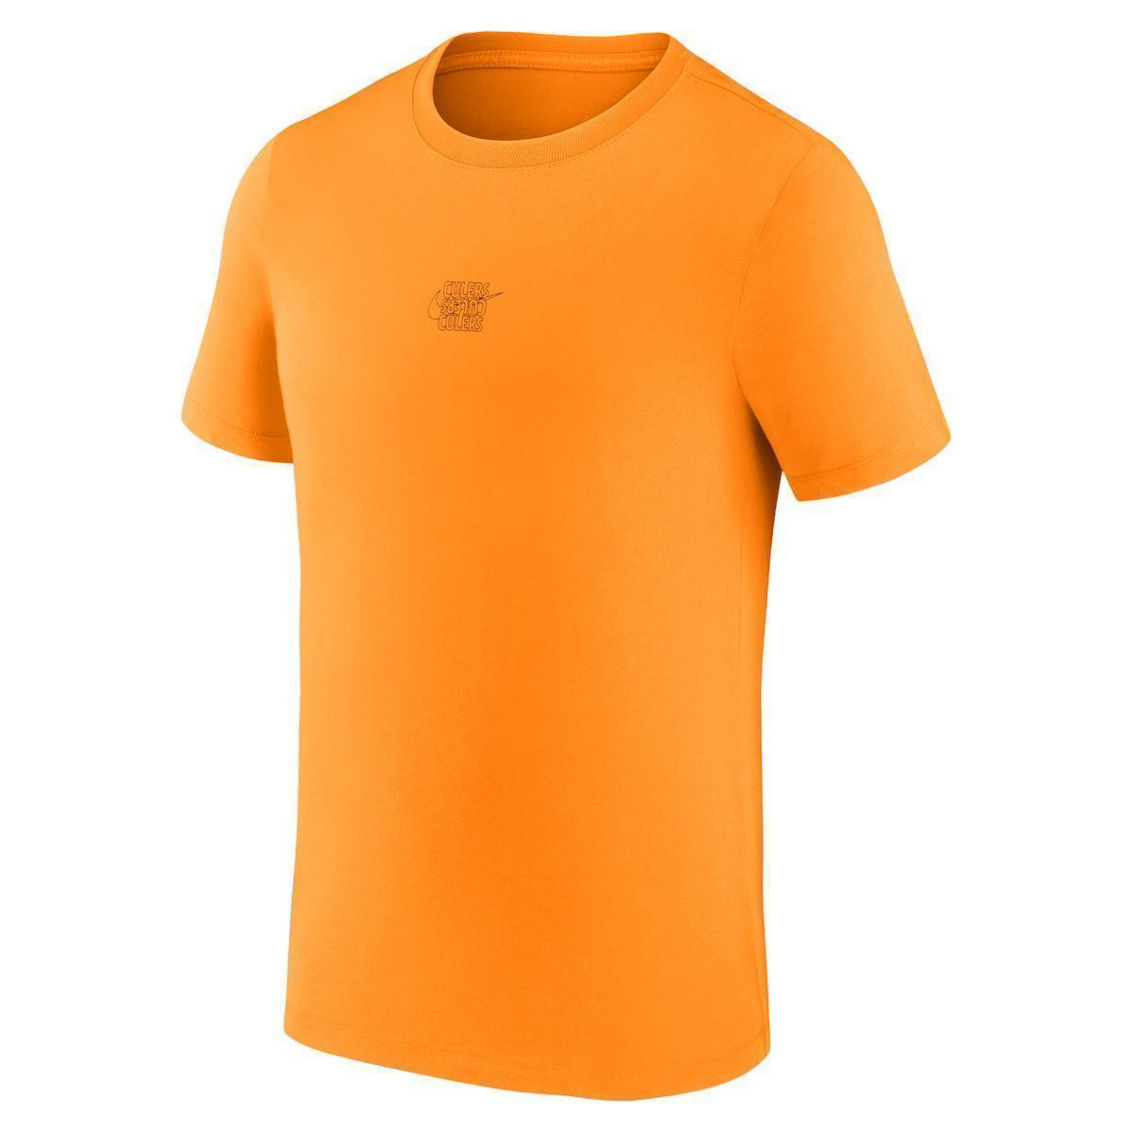 Nike Men's Orange Barcelona Club Swoosh T-Shirt - Image 3 of 4